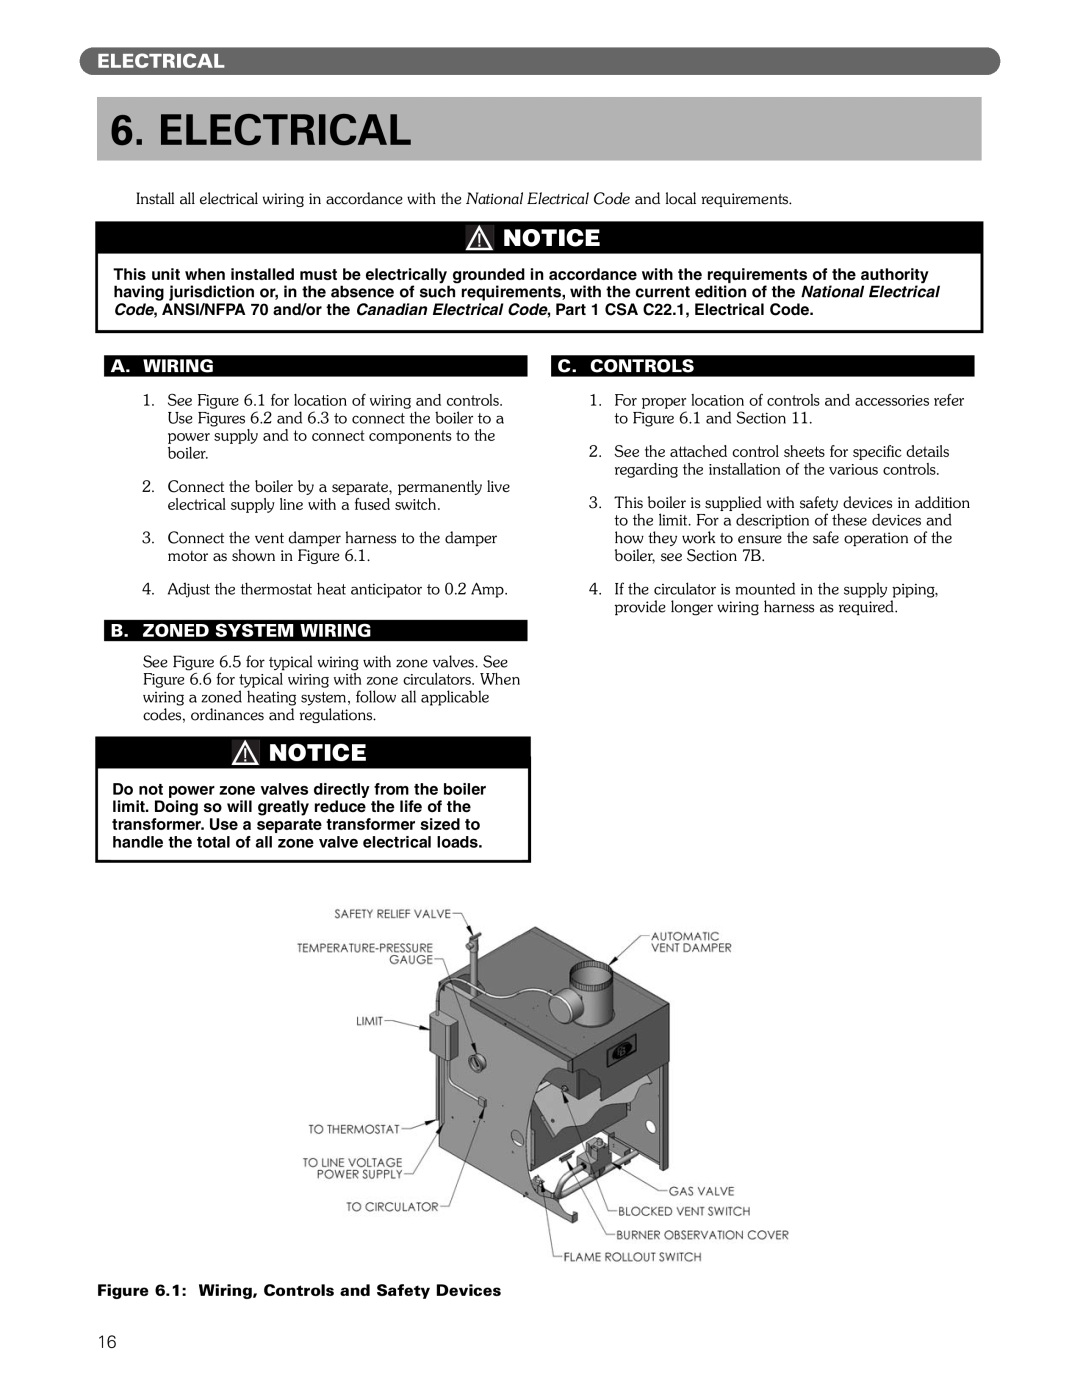 PB Heat MI/MIH series manual Electrical, A. Wiring, C. Controls, B.Zoned System Wiring 